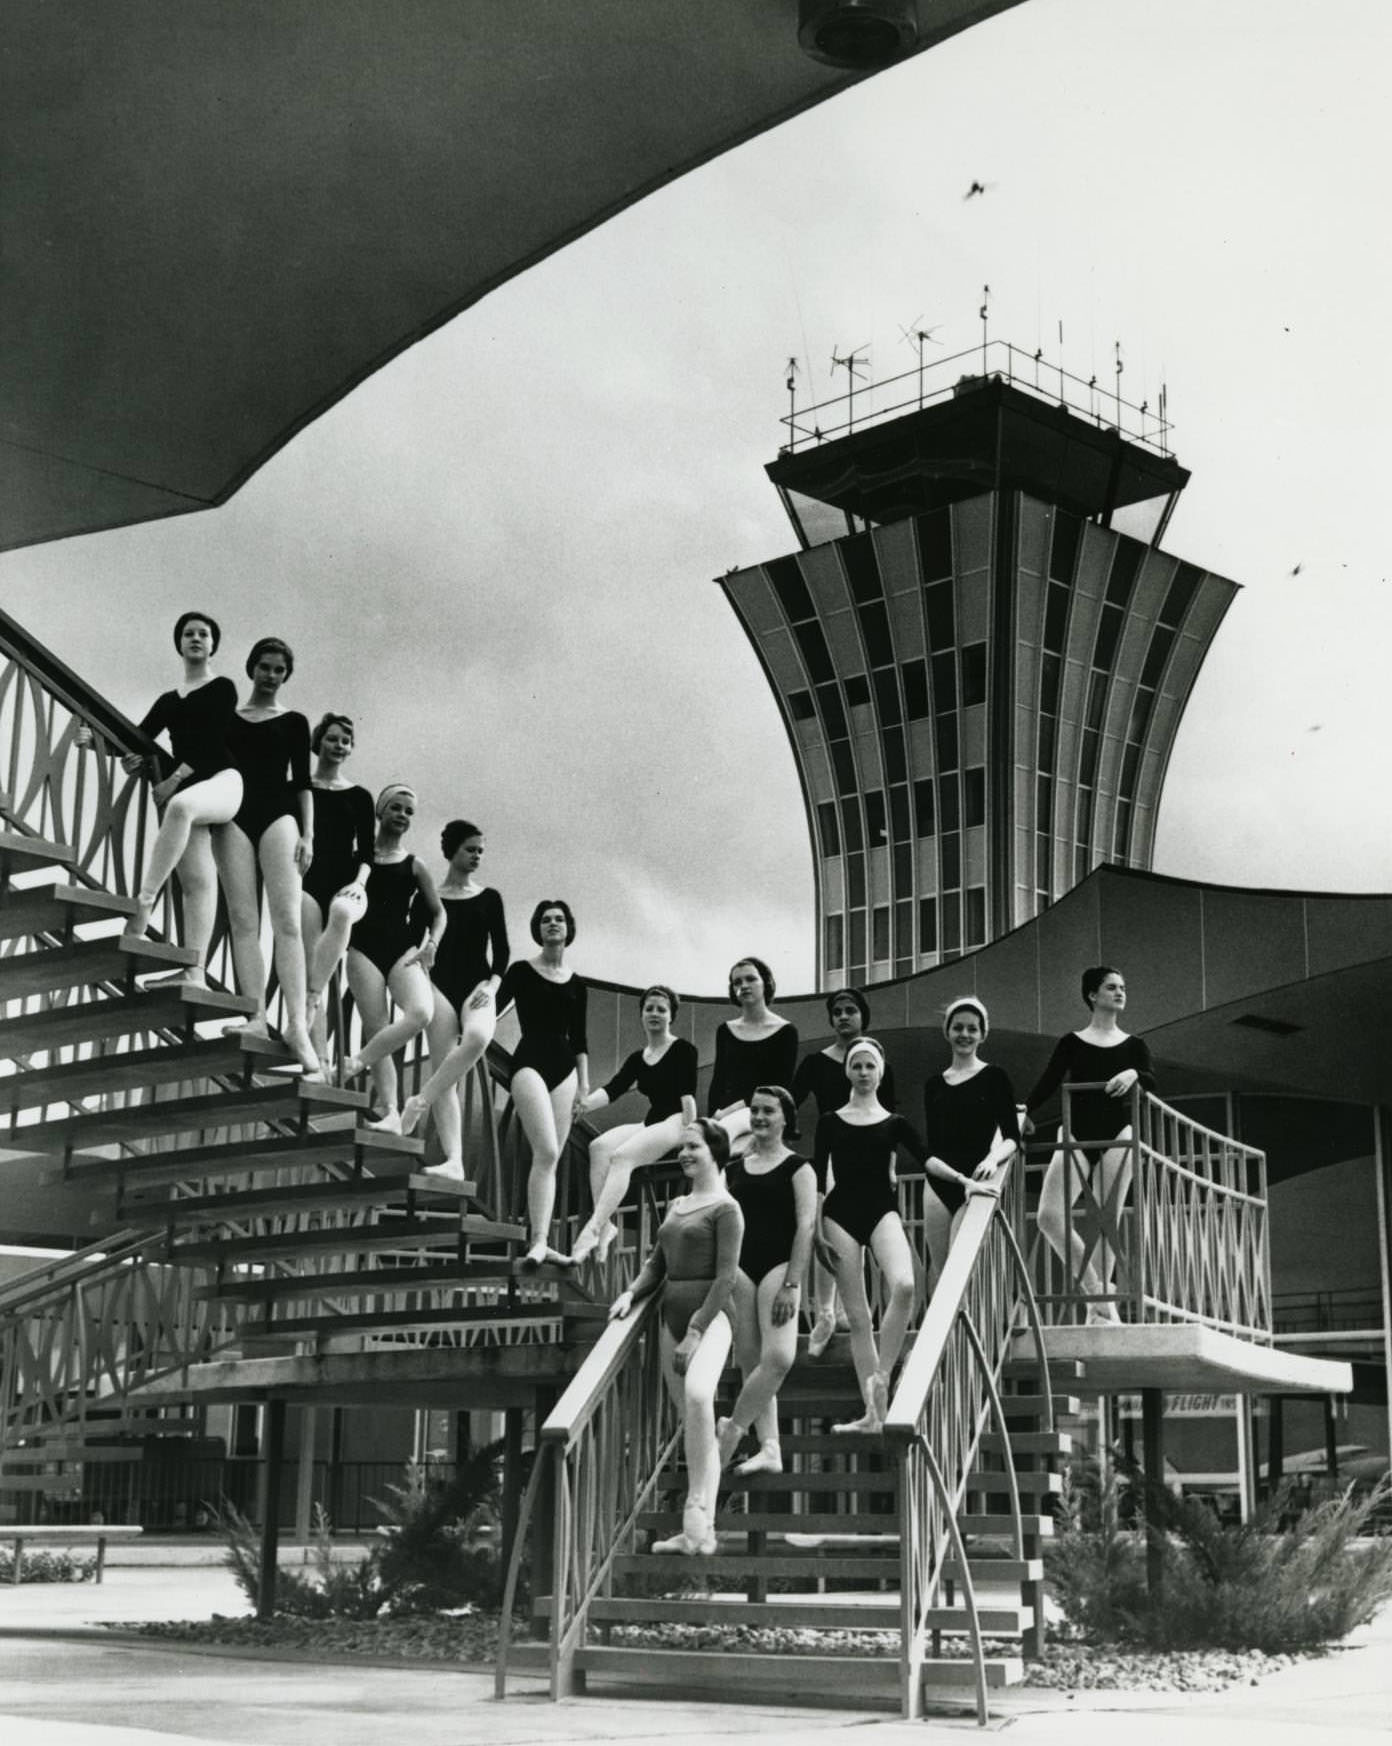 The Austin Ballet Society at the Municipal Airport, 1962.